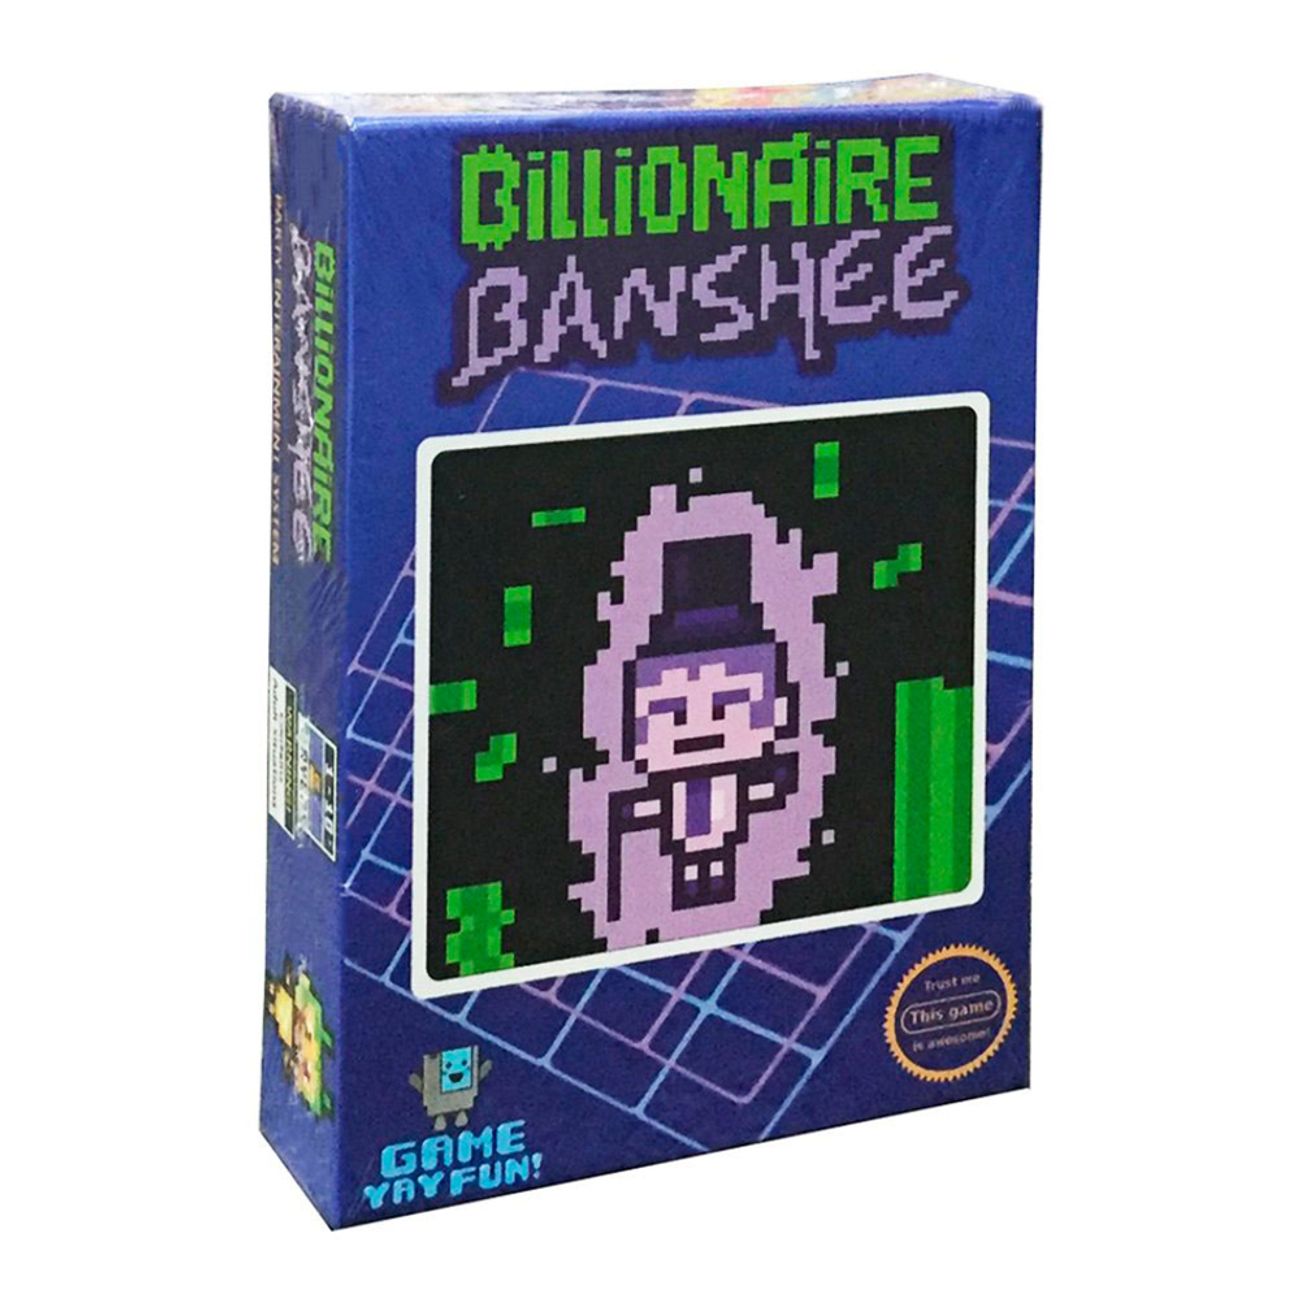 billionaire-banshee-spel-75680-1